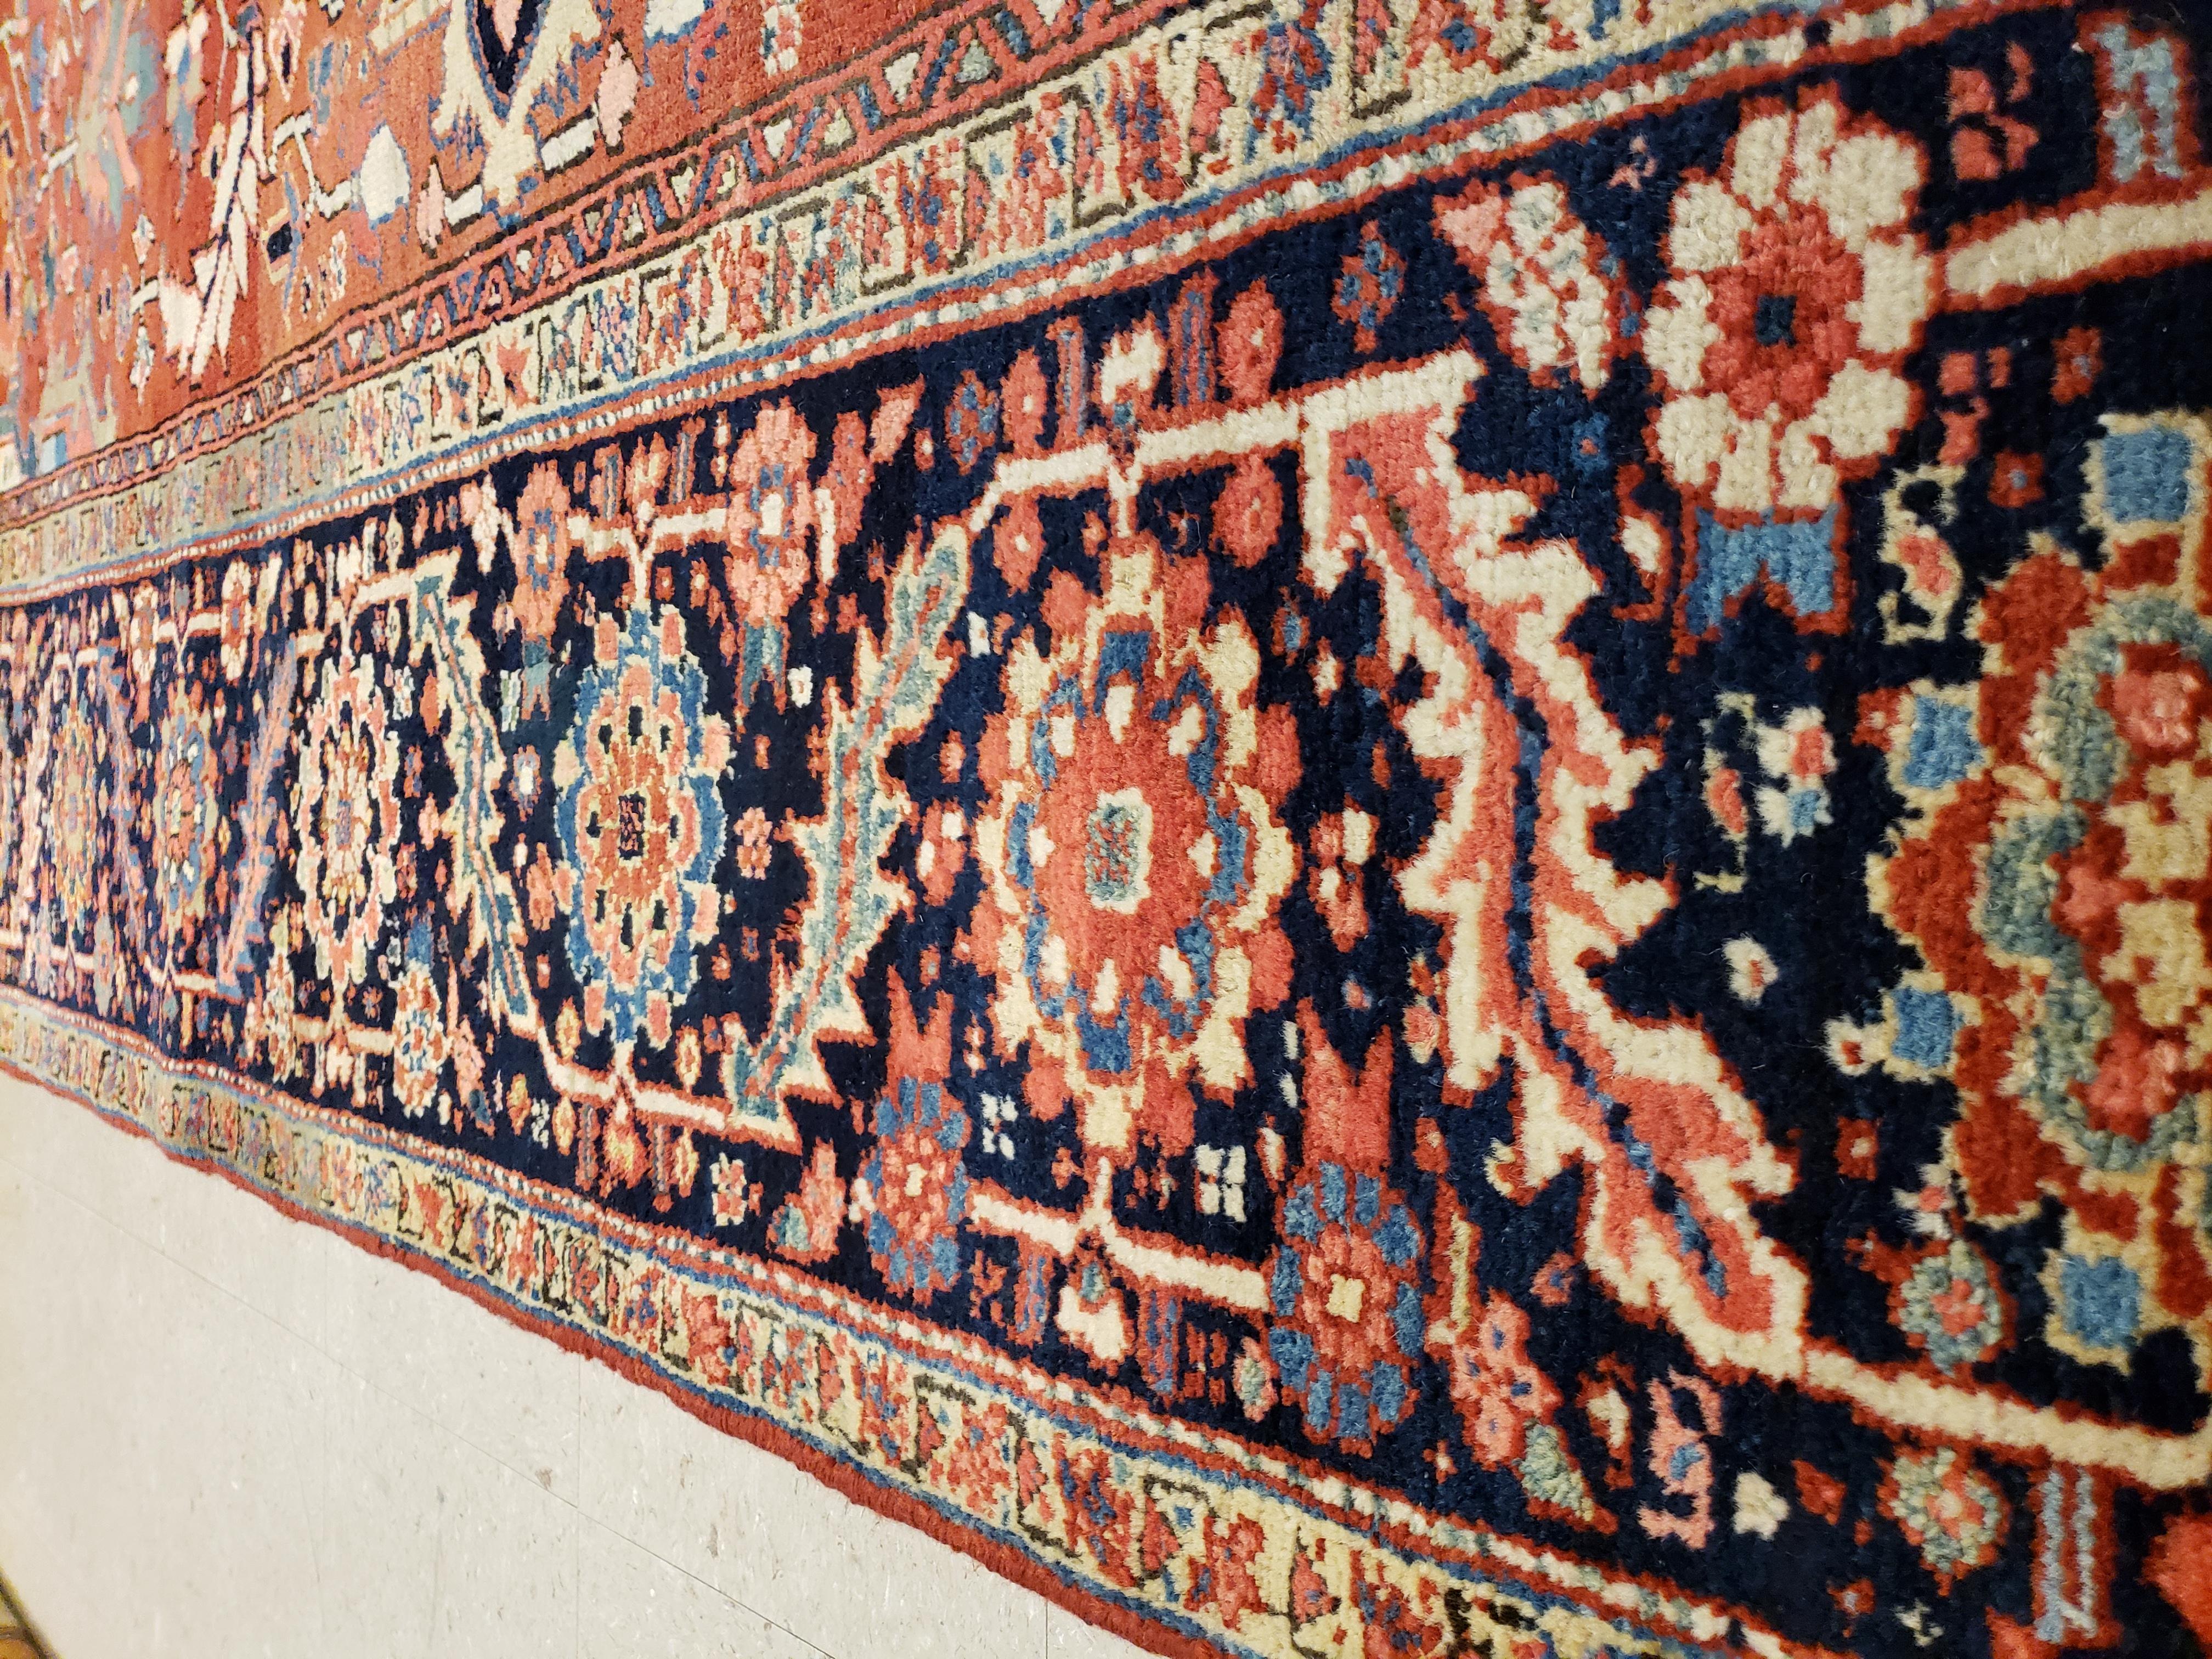 20th Century Antique Persian Heriz Carpet, Handmade Wool Oriental Rug, Rust, Navy, Lt Blue